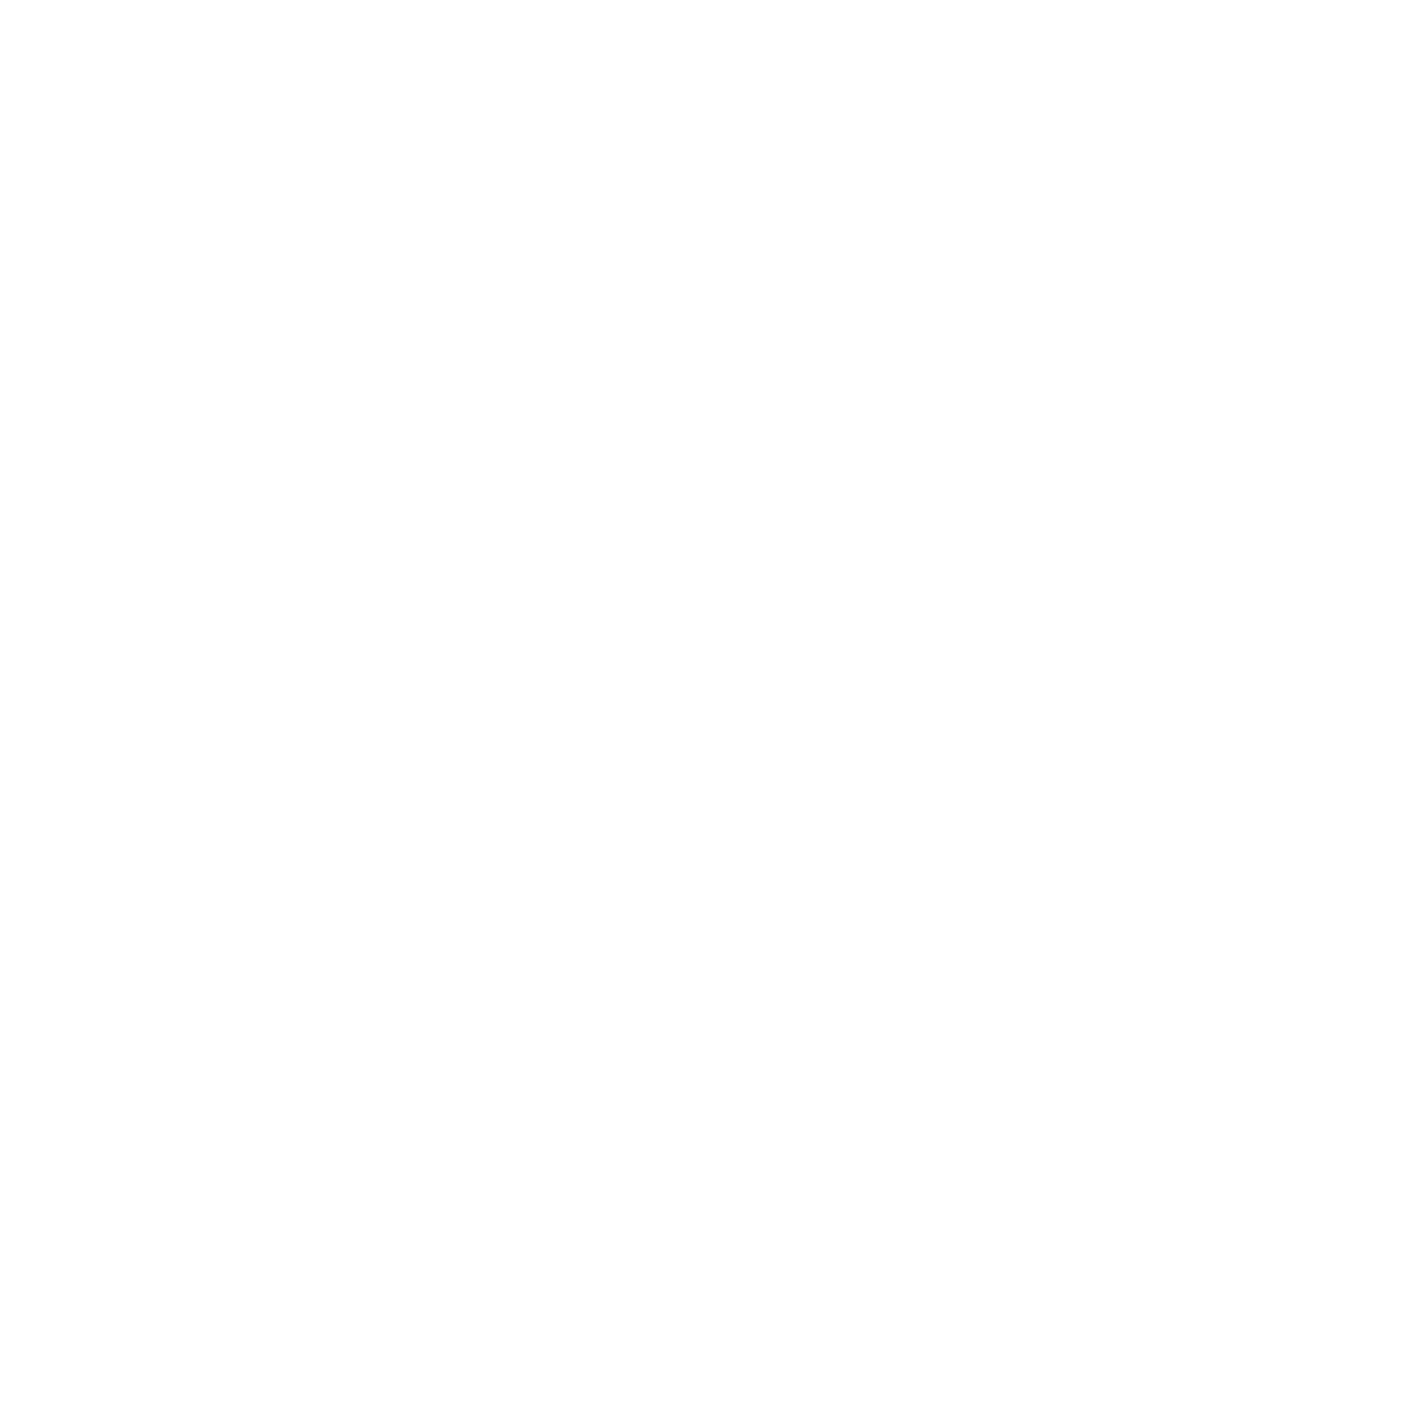 The Laughing Lark Cafe Frankston, Mornington Peninsula